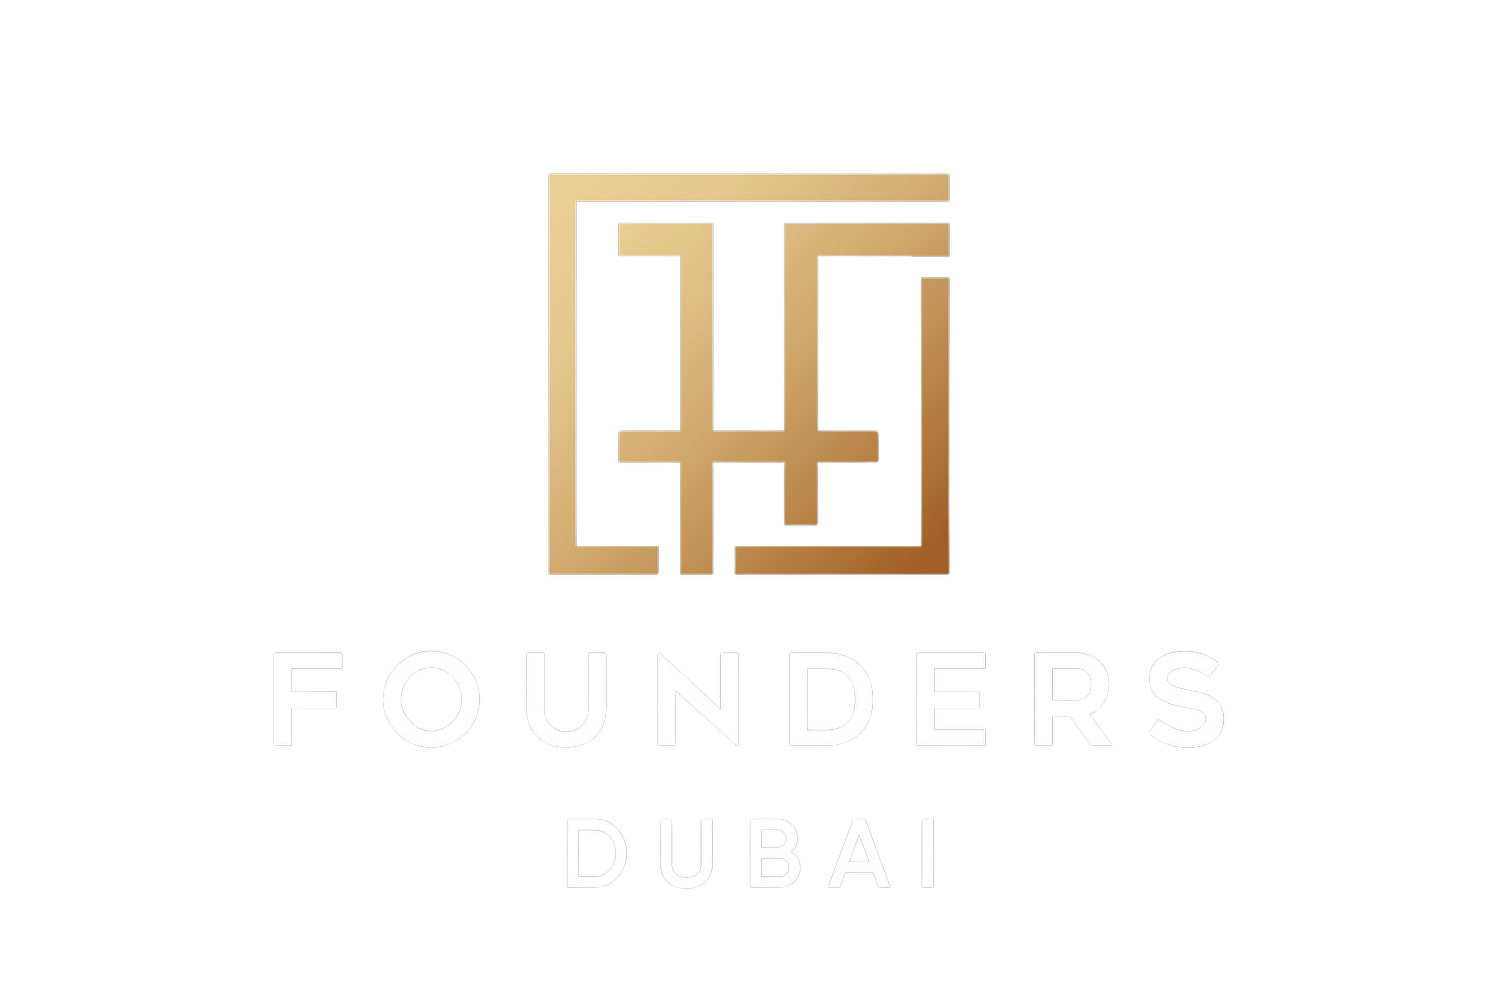 Founders Dubai